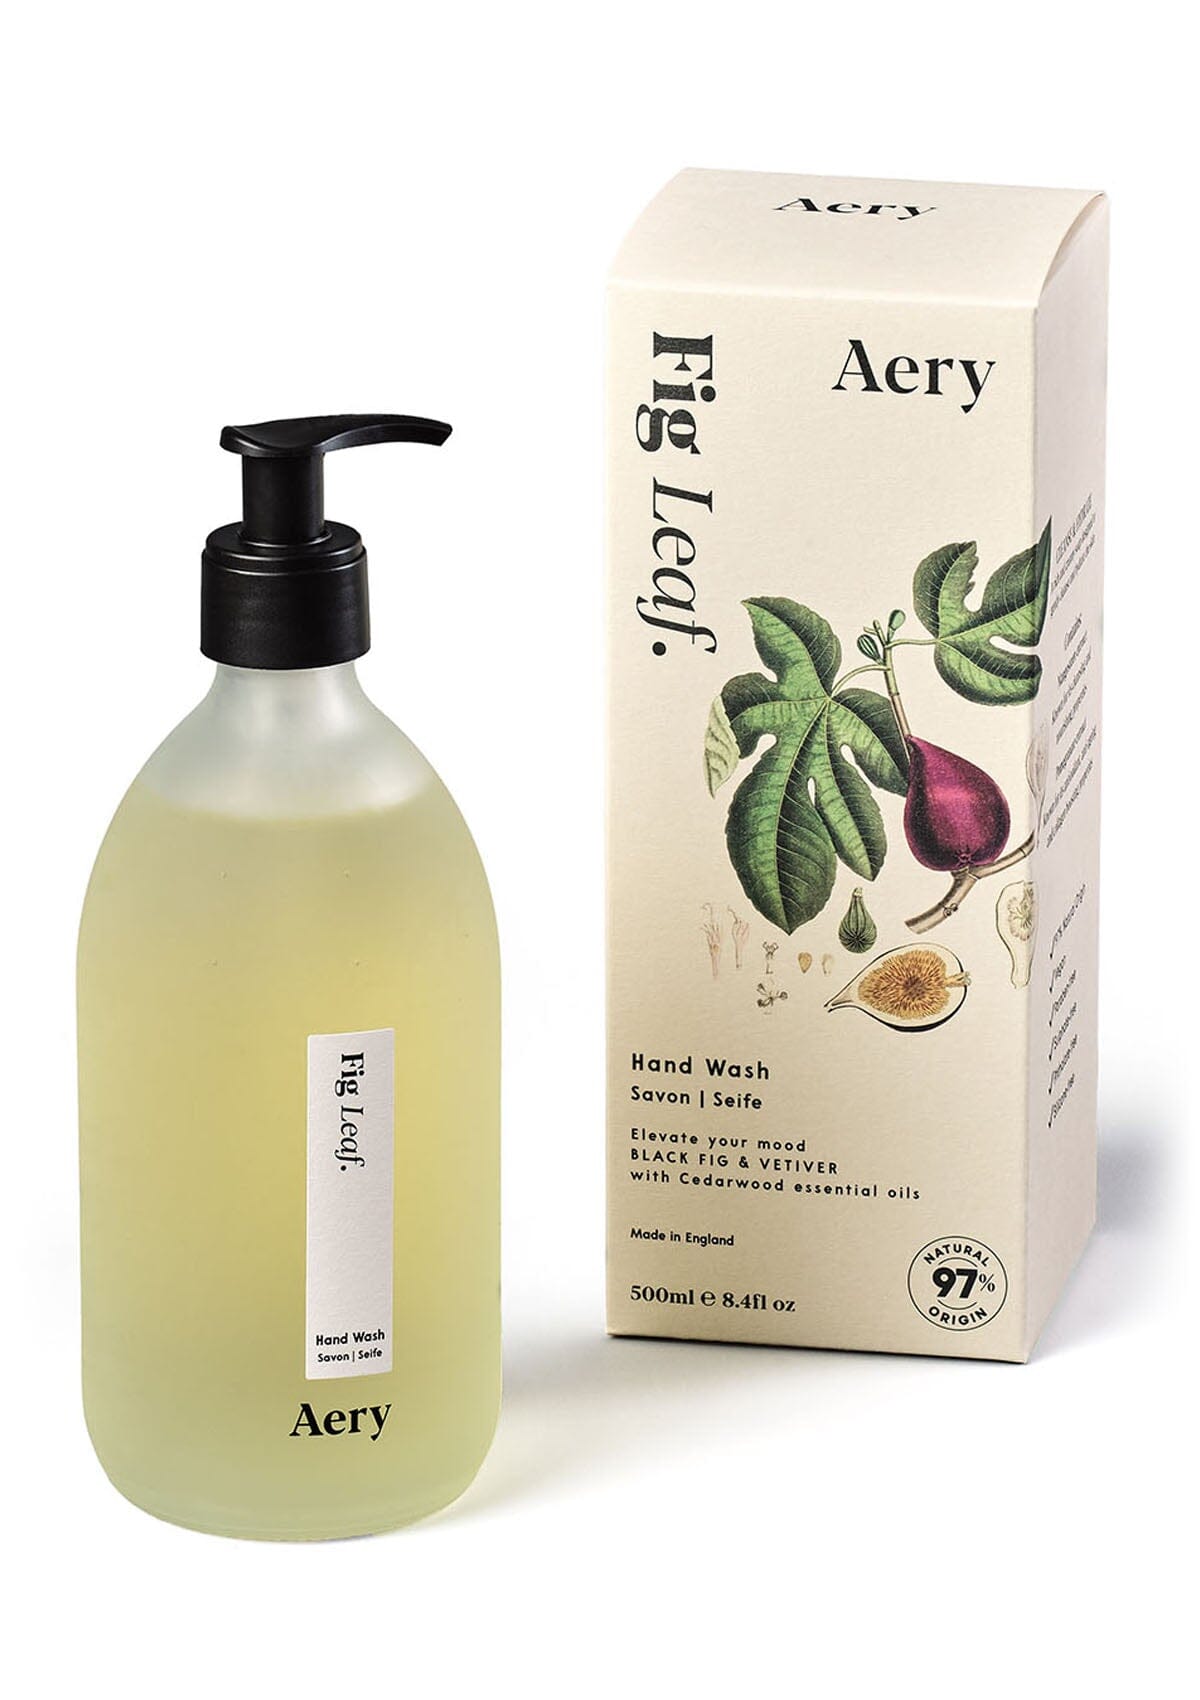 Cream Fig Leaf hand wash by Aery on white background 